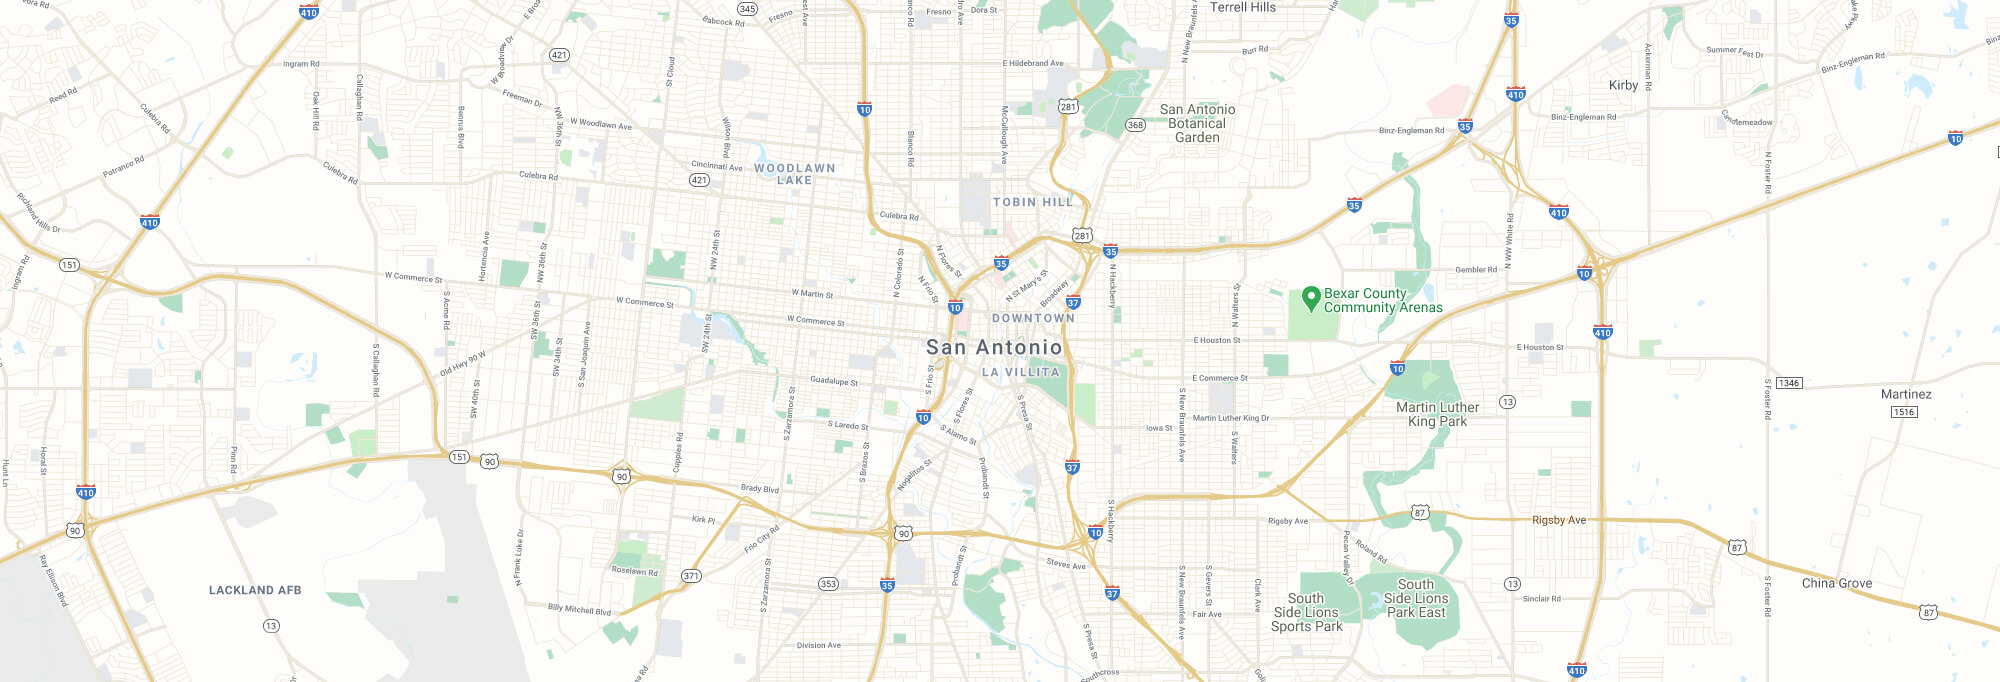 San Antonio city map